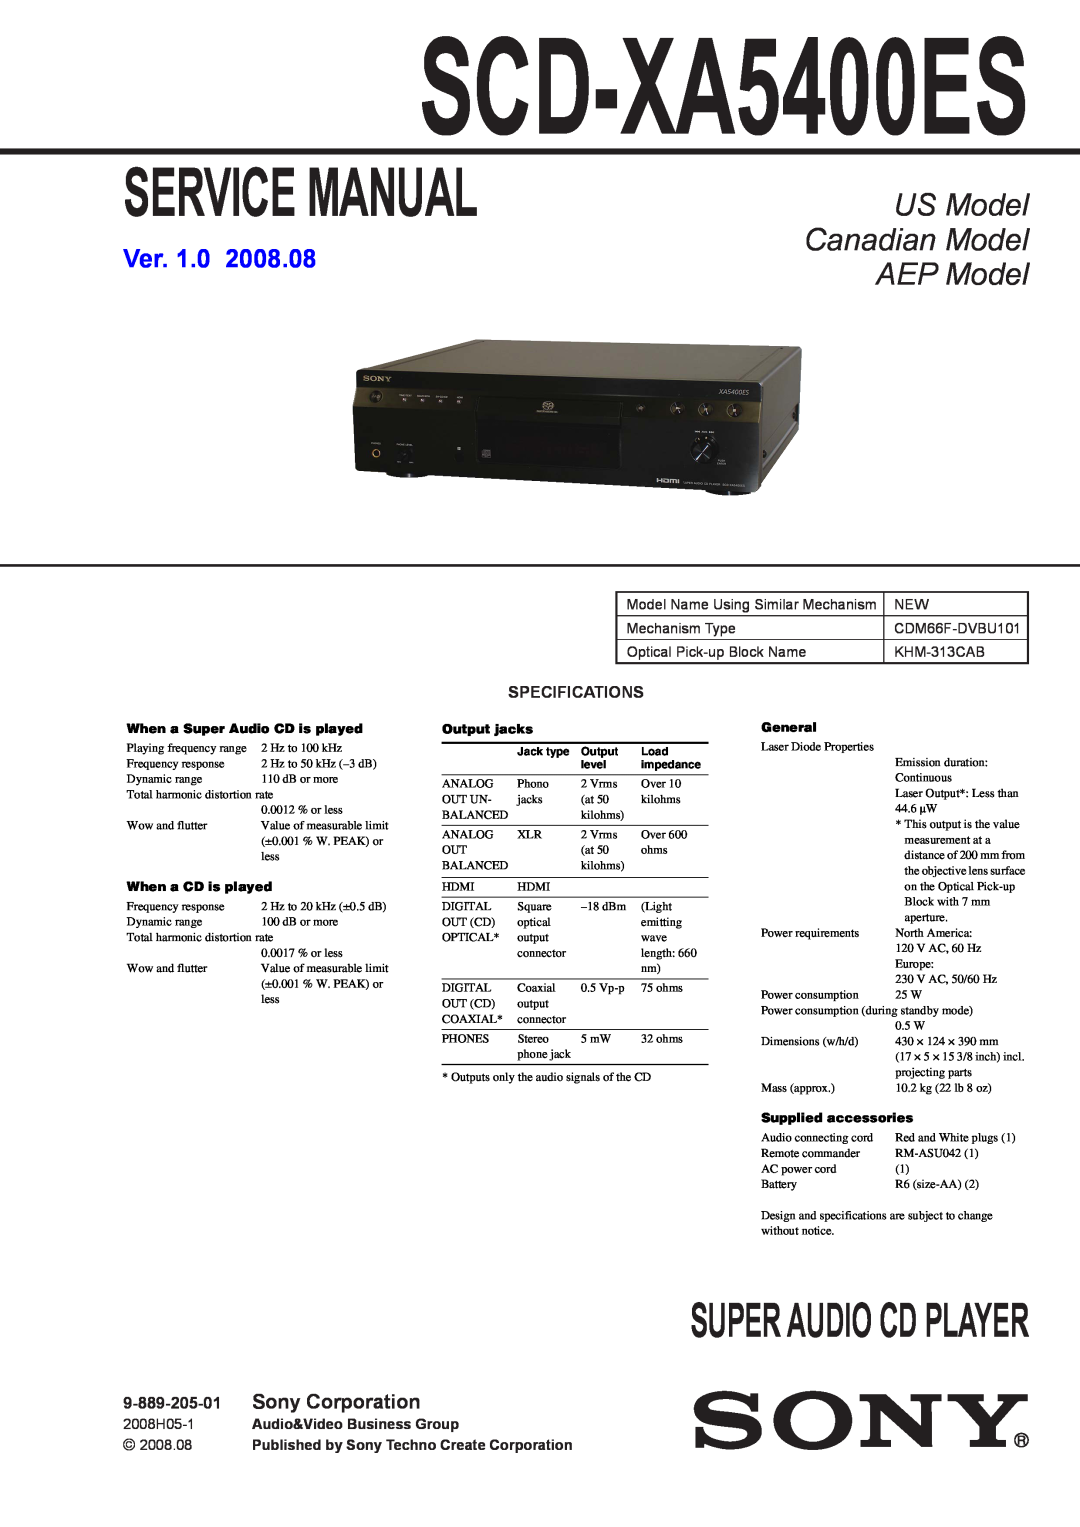 Sony 2008H05-1 service manual SCD-XA5400ES, Super Audio Cd Player, US Model, AEP Model, Canadian Model, Ver, 9-889-205-01 